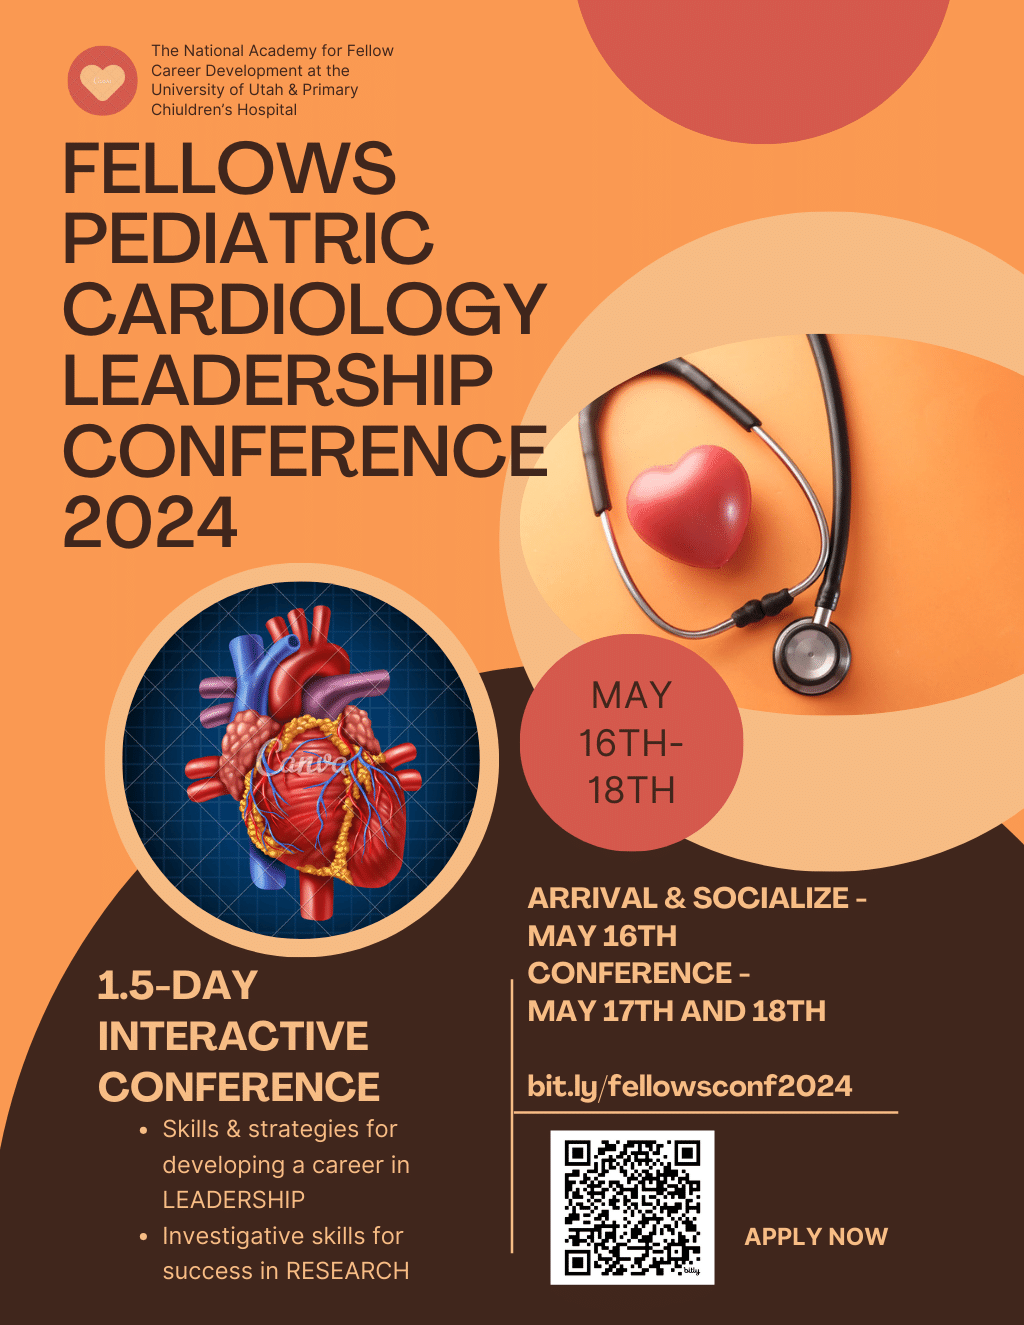 Fellows Pediatric Cardiology Leadership Conference 2024